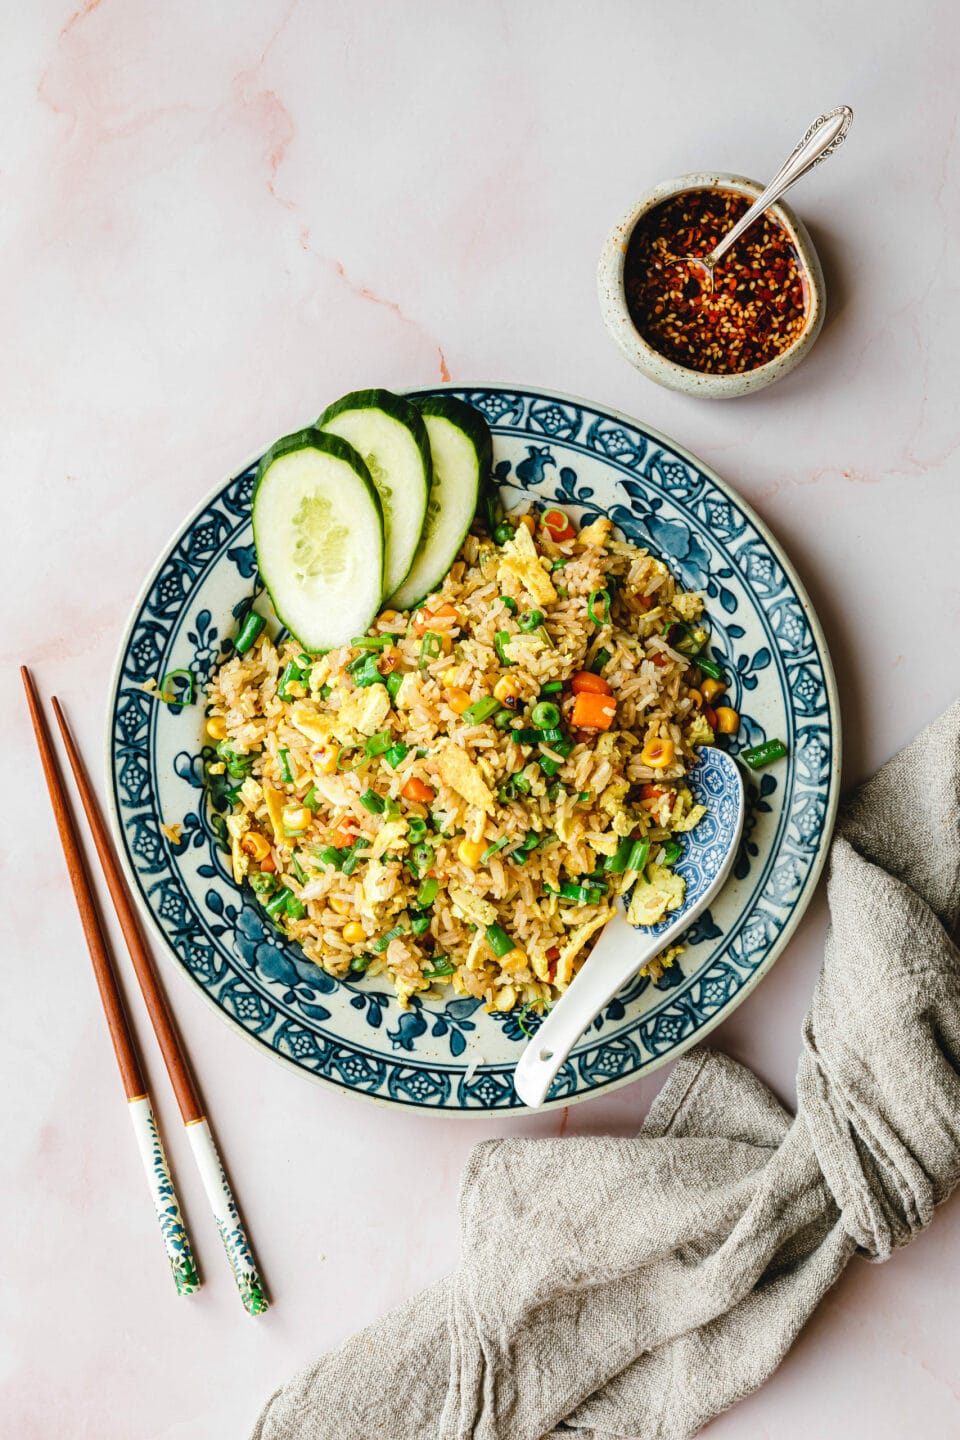 Veganer gebratener Reis mit Tofu-Ei